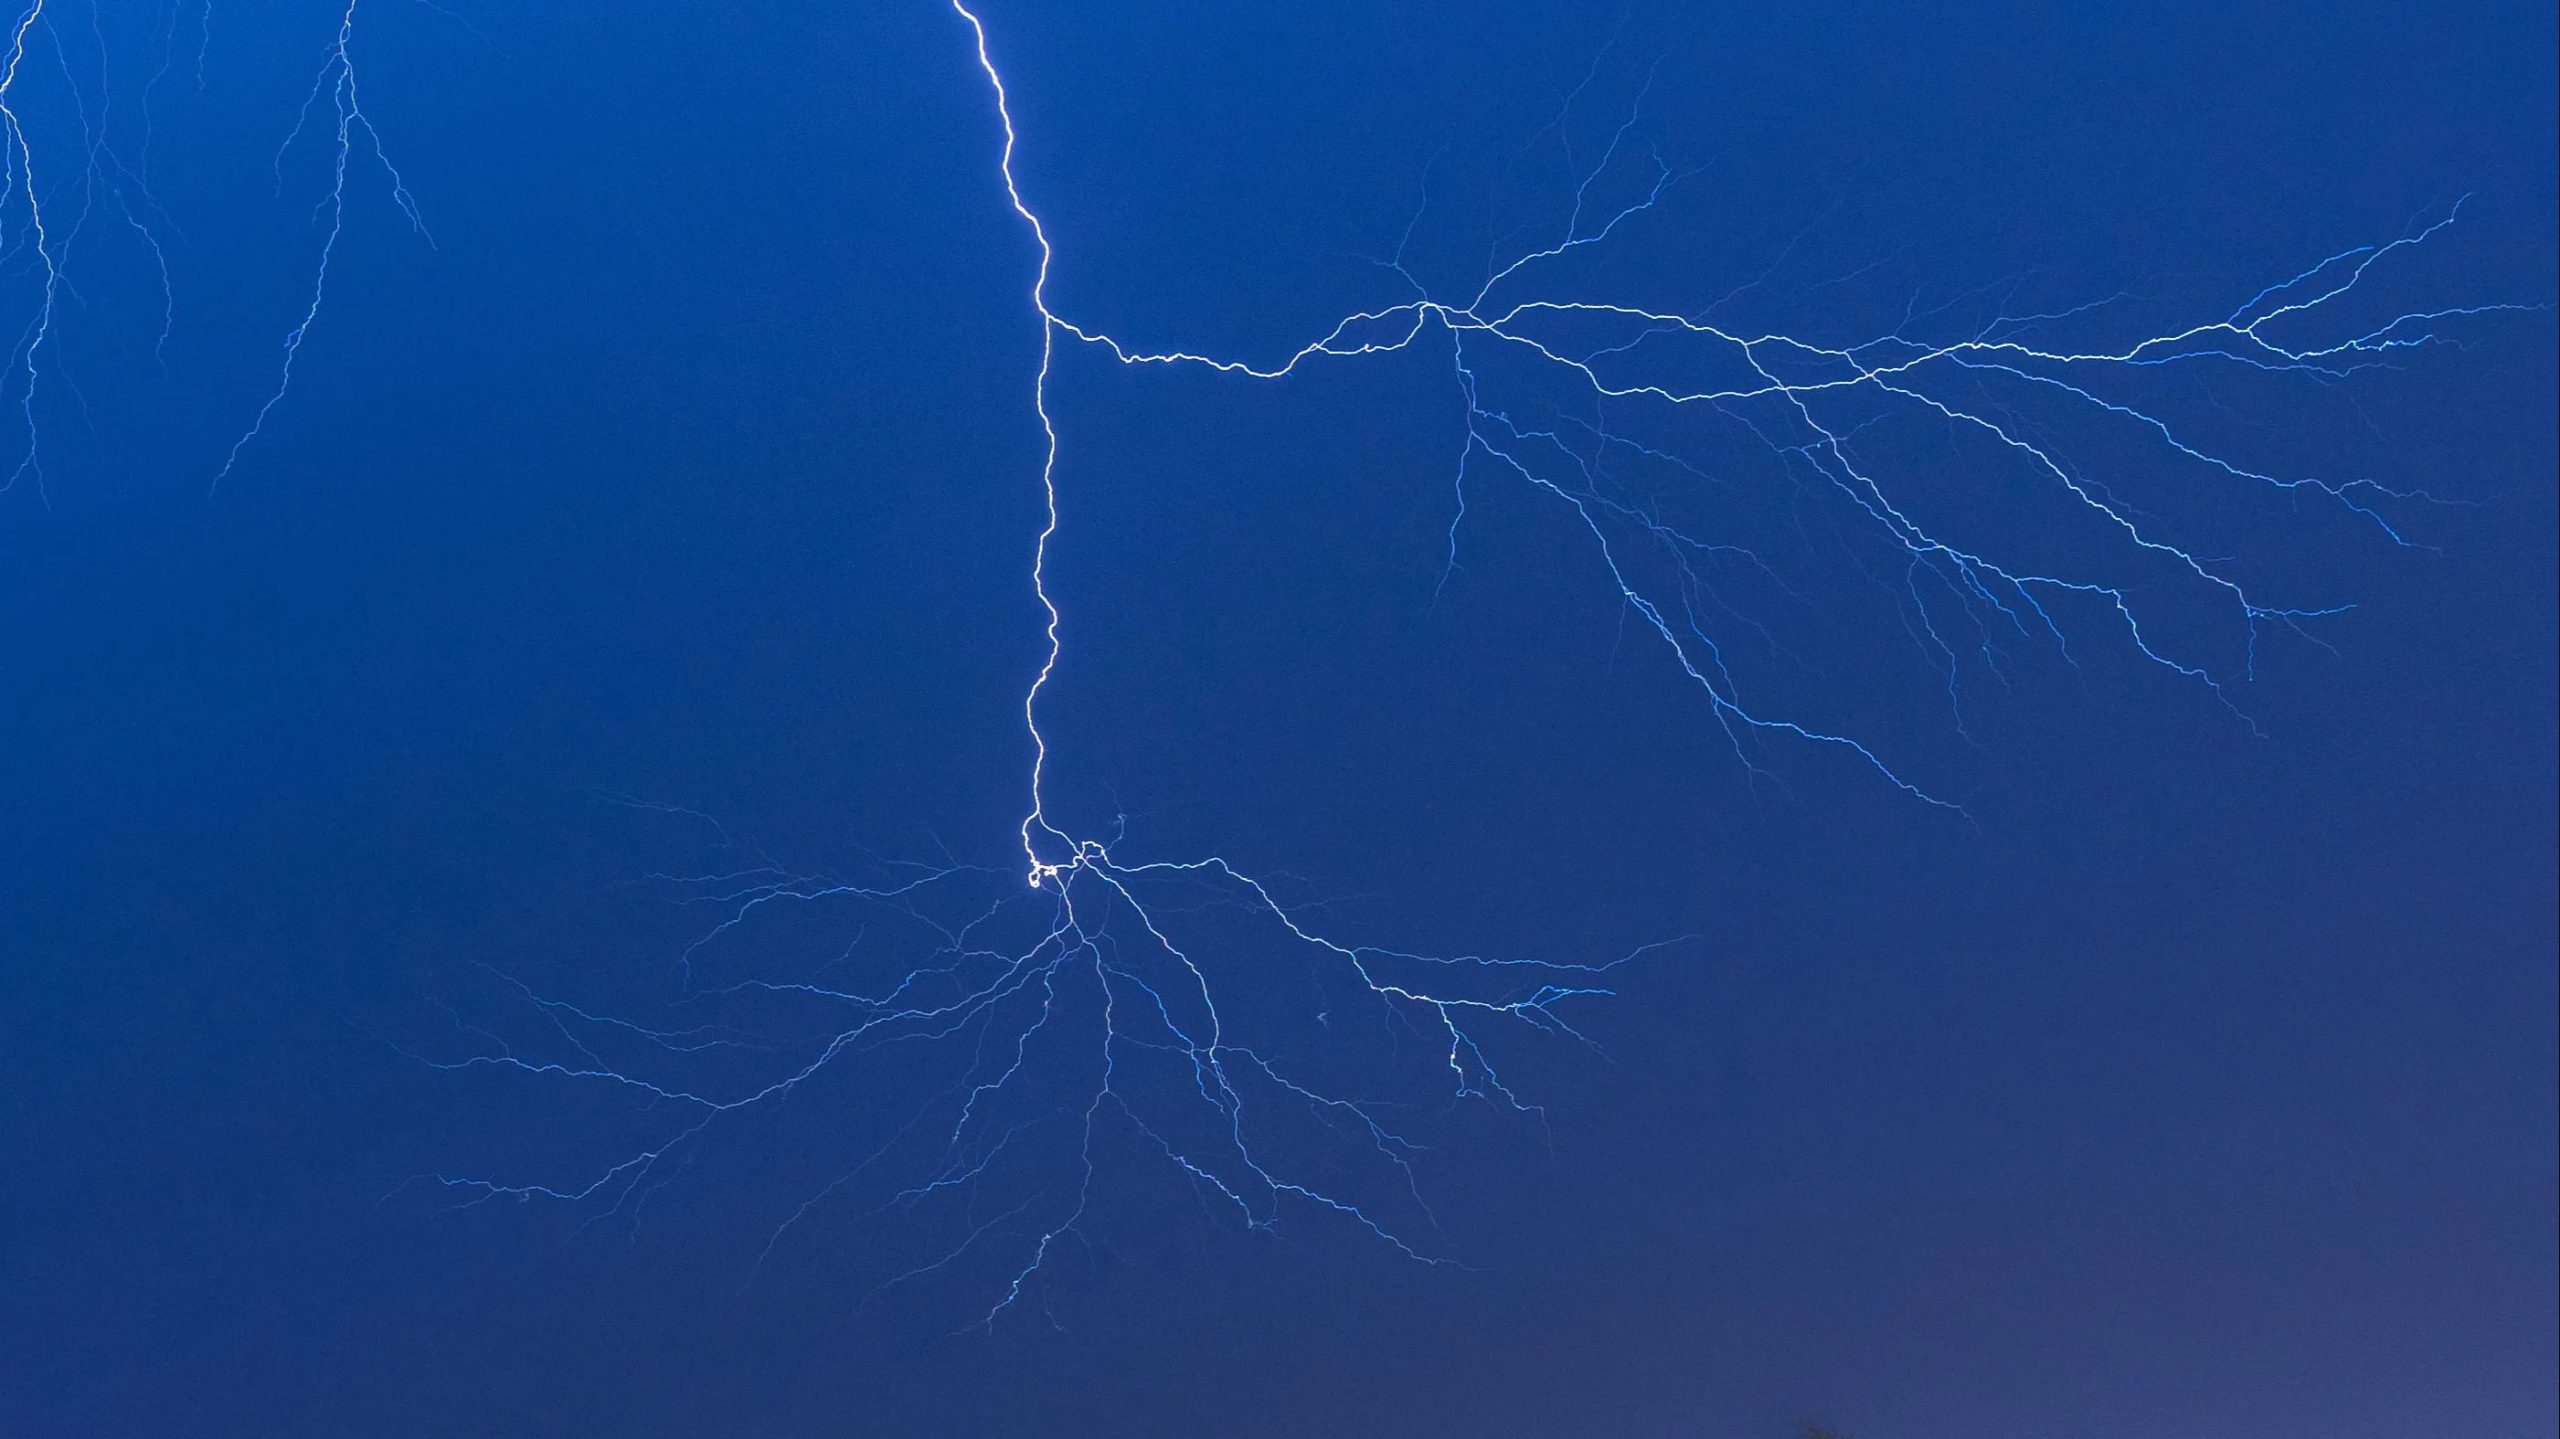 Lightning strikes kill 50 in Rajasthan, Uttar Pradesh: All you need to know